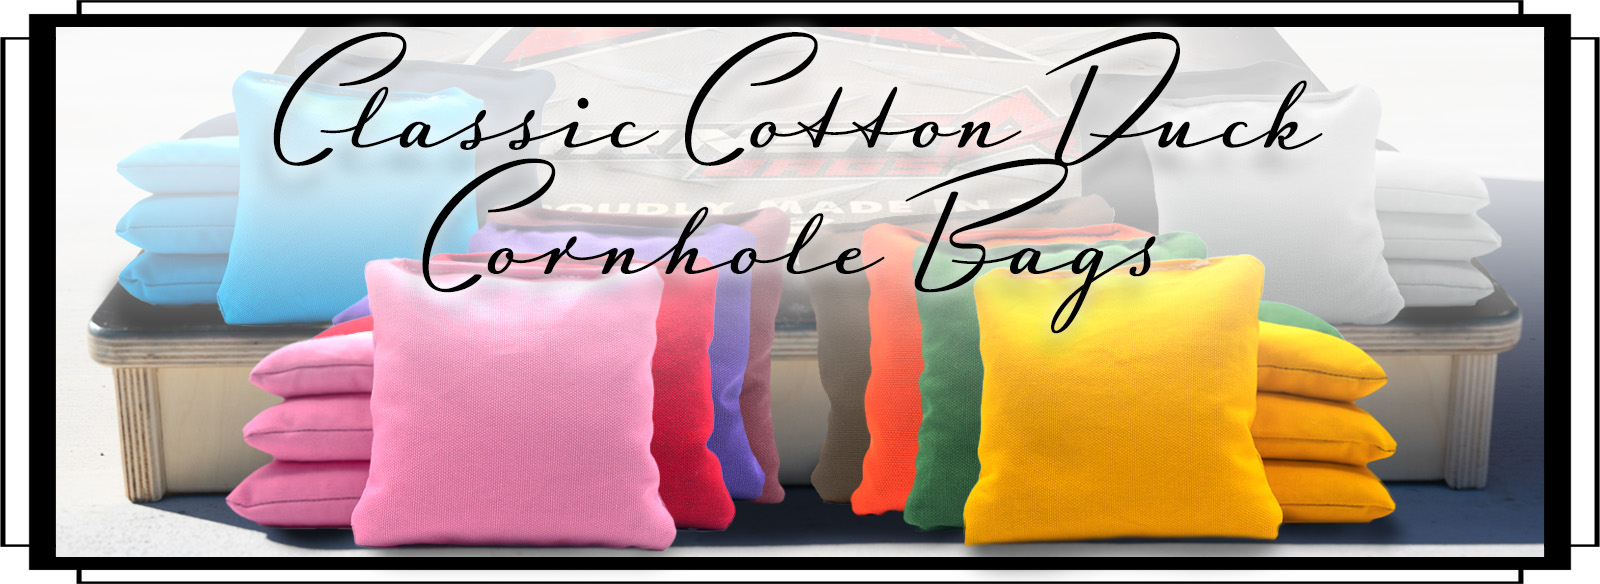 cornstar-bags-classic-cotton-duck-cornhole-bags-header.jpg